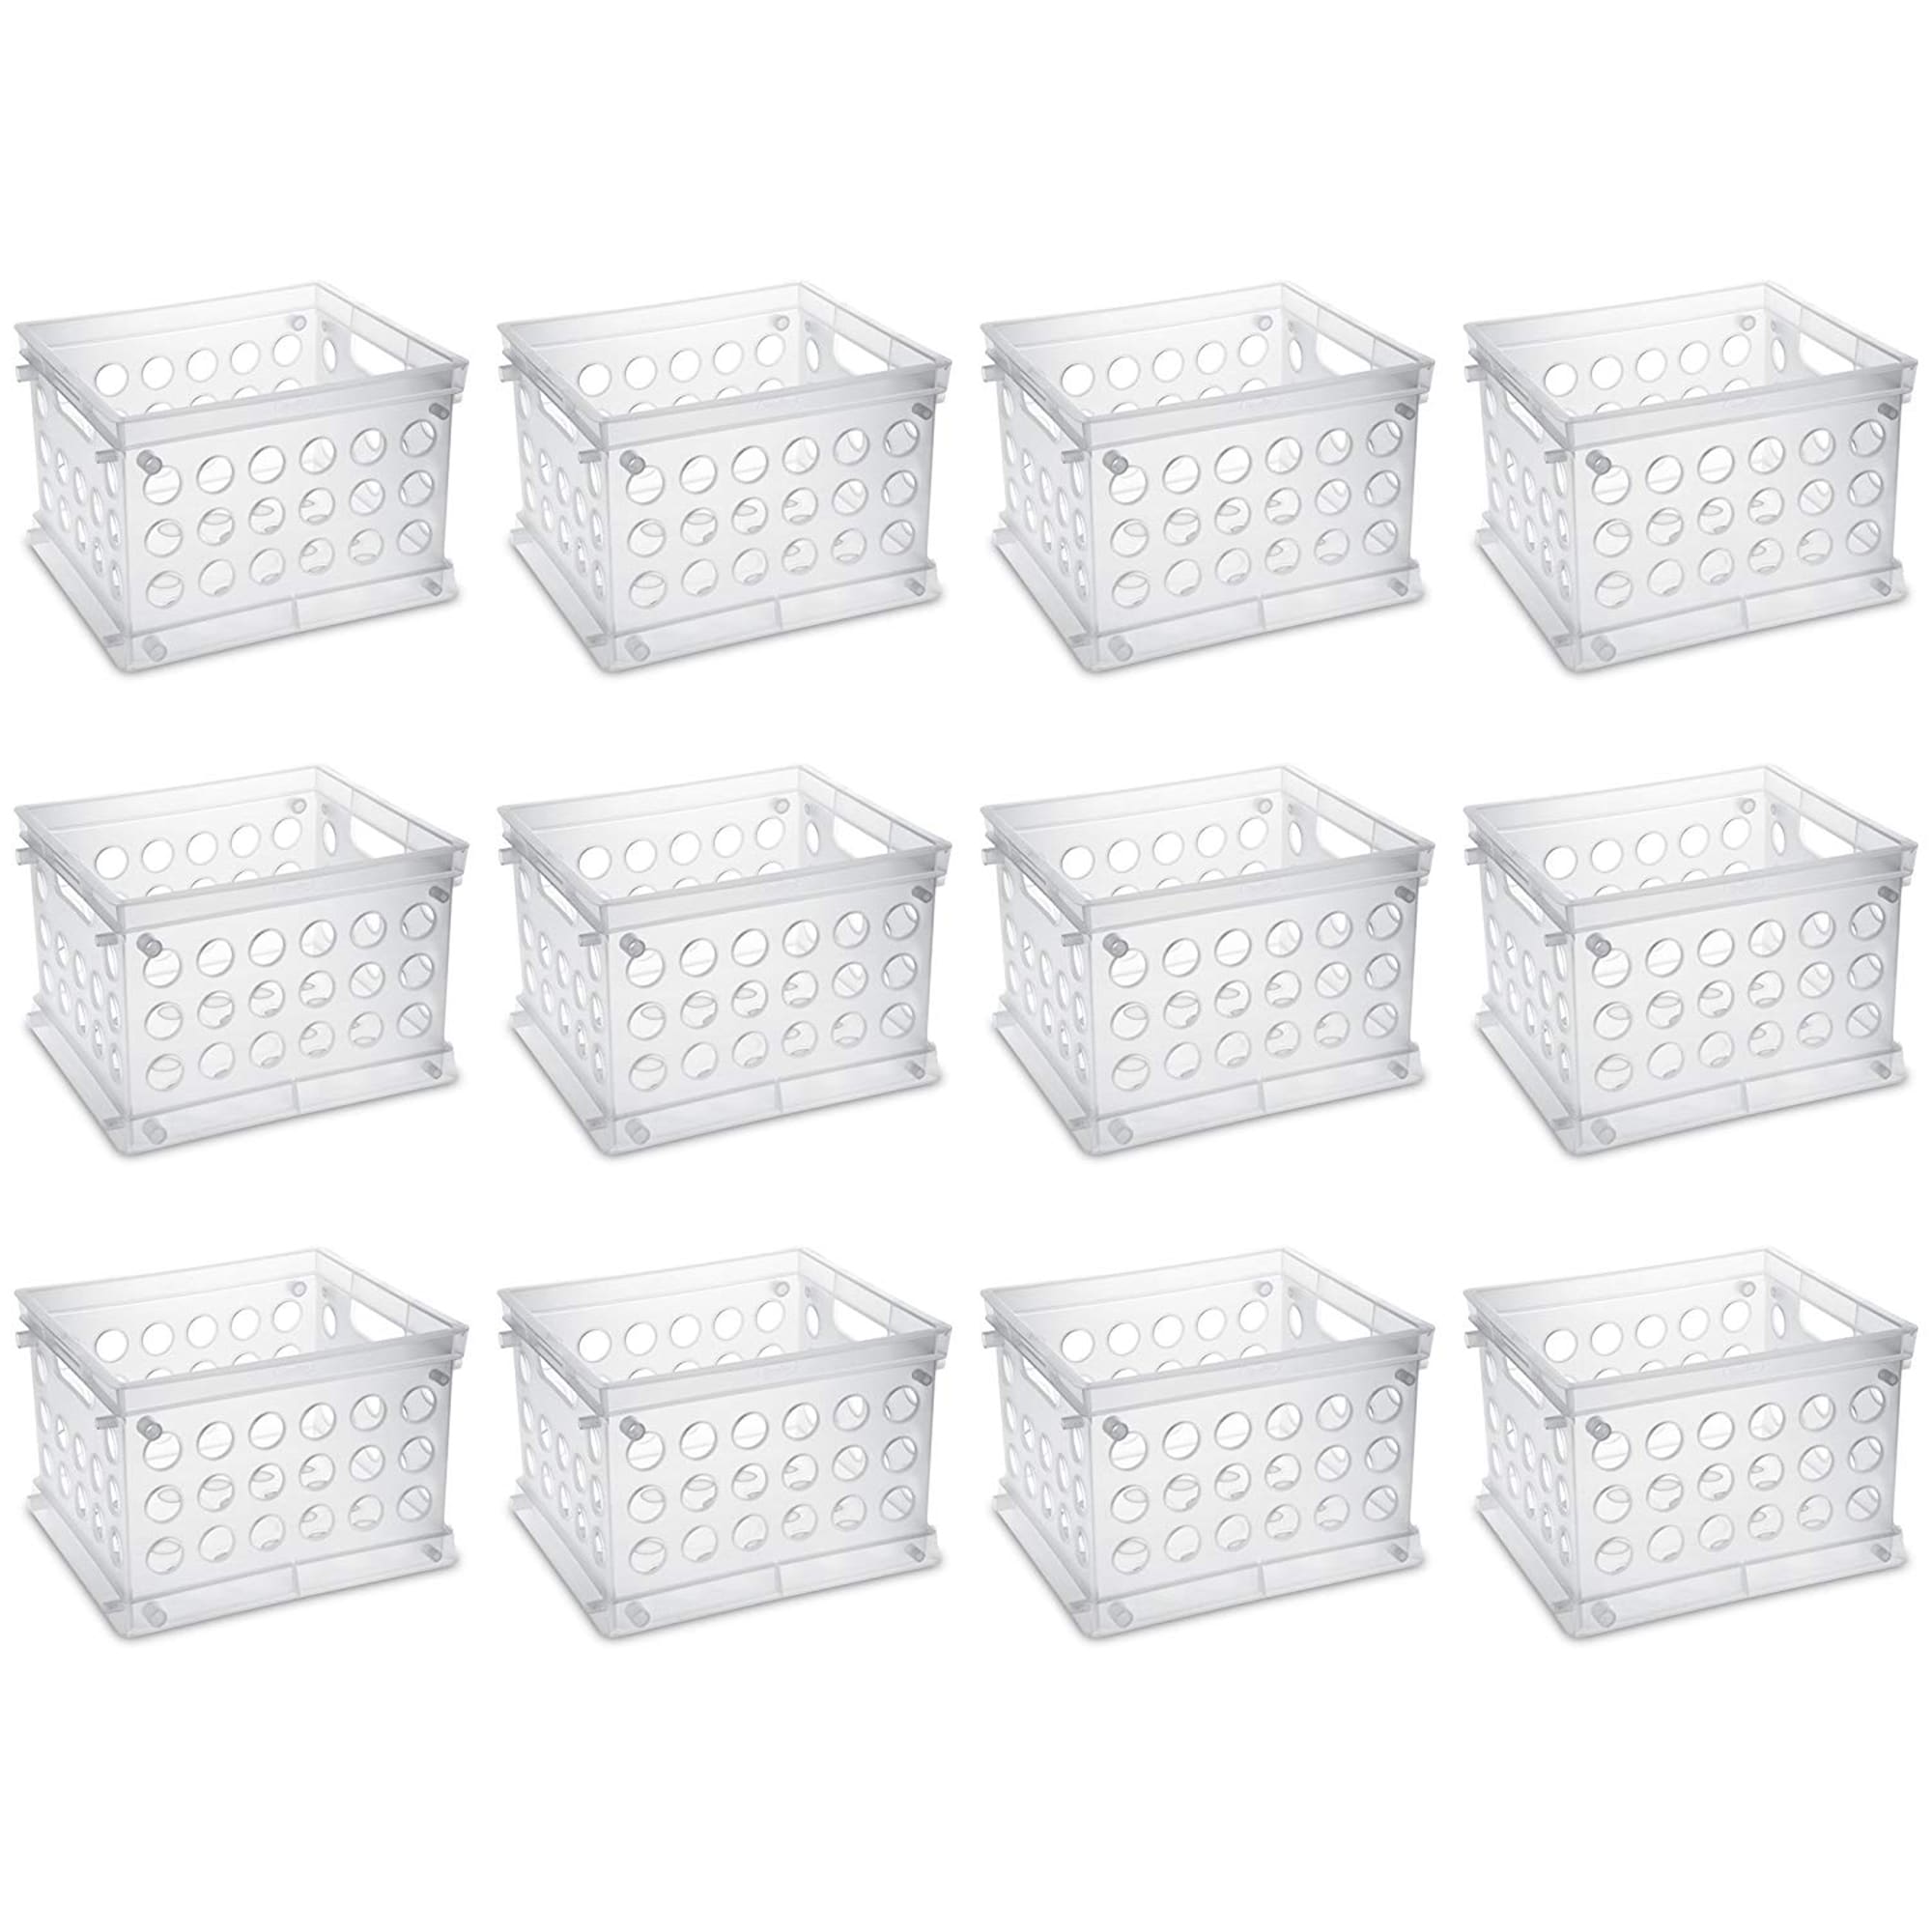 Sterilite Convenient Mini Square Small Storage Organizing Crate, Clear (12 Pack)